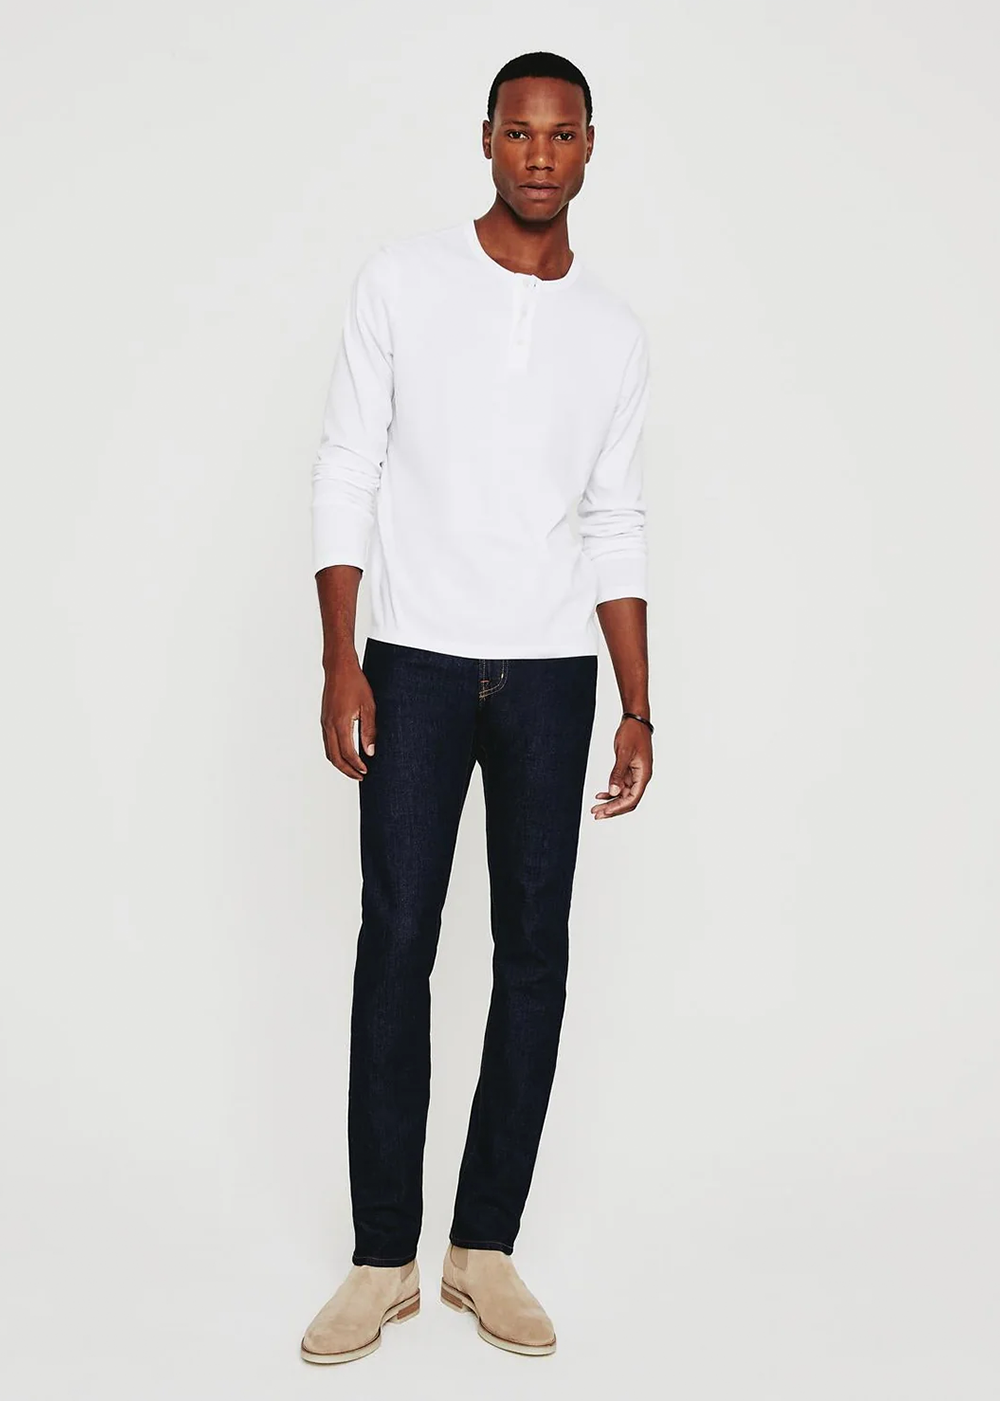 Tellis Modern Slim Jean - Crucial - AG Jeans Canada - Danali1783TSYCUCL